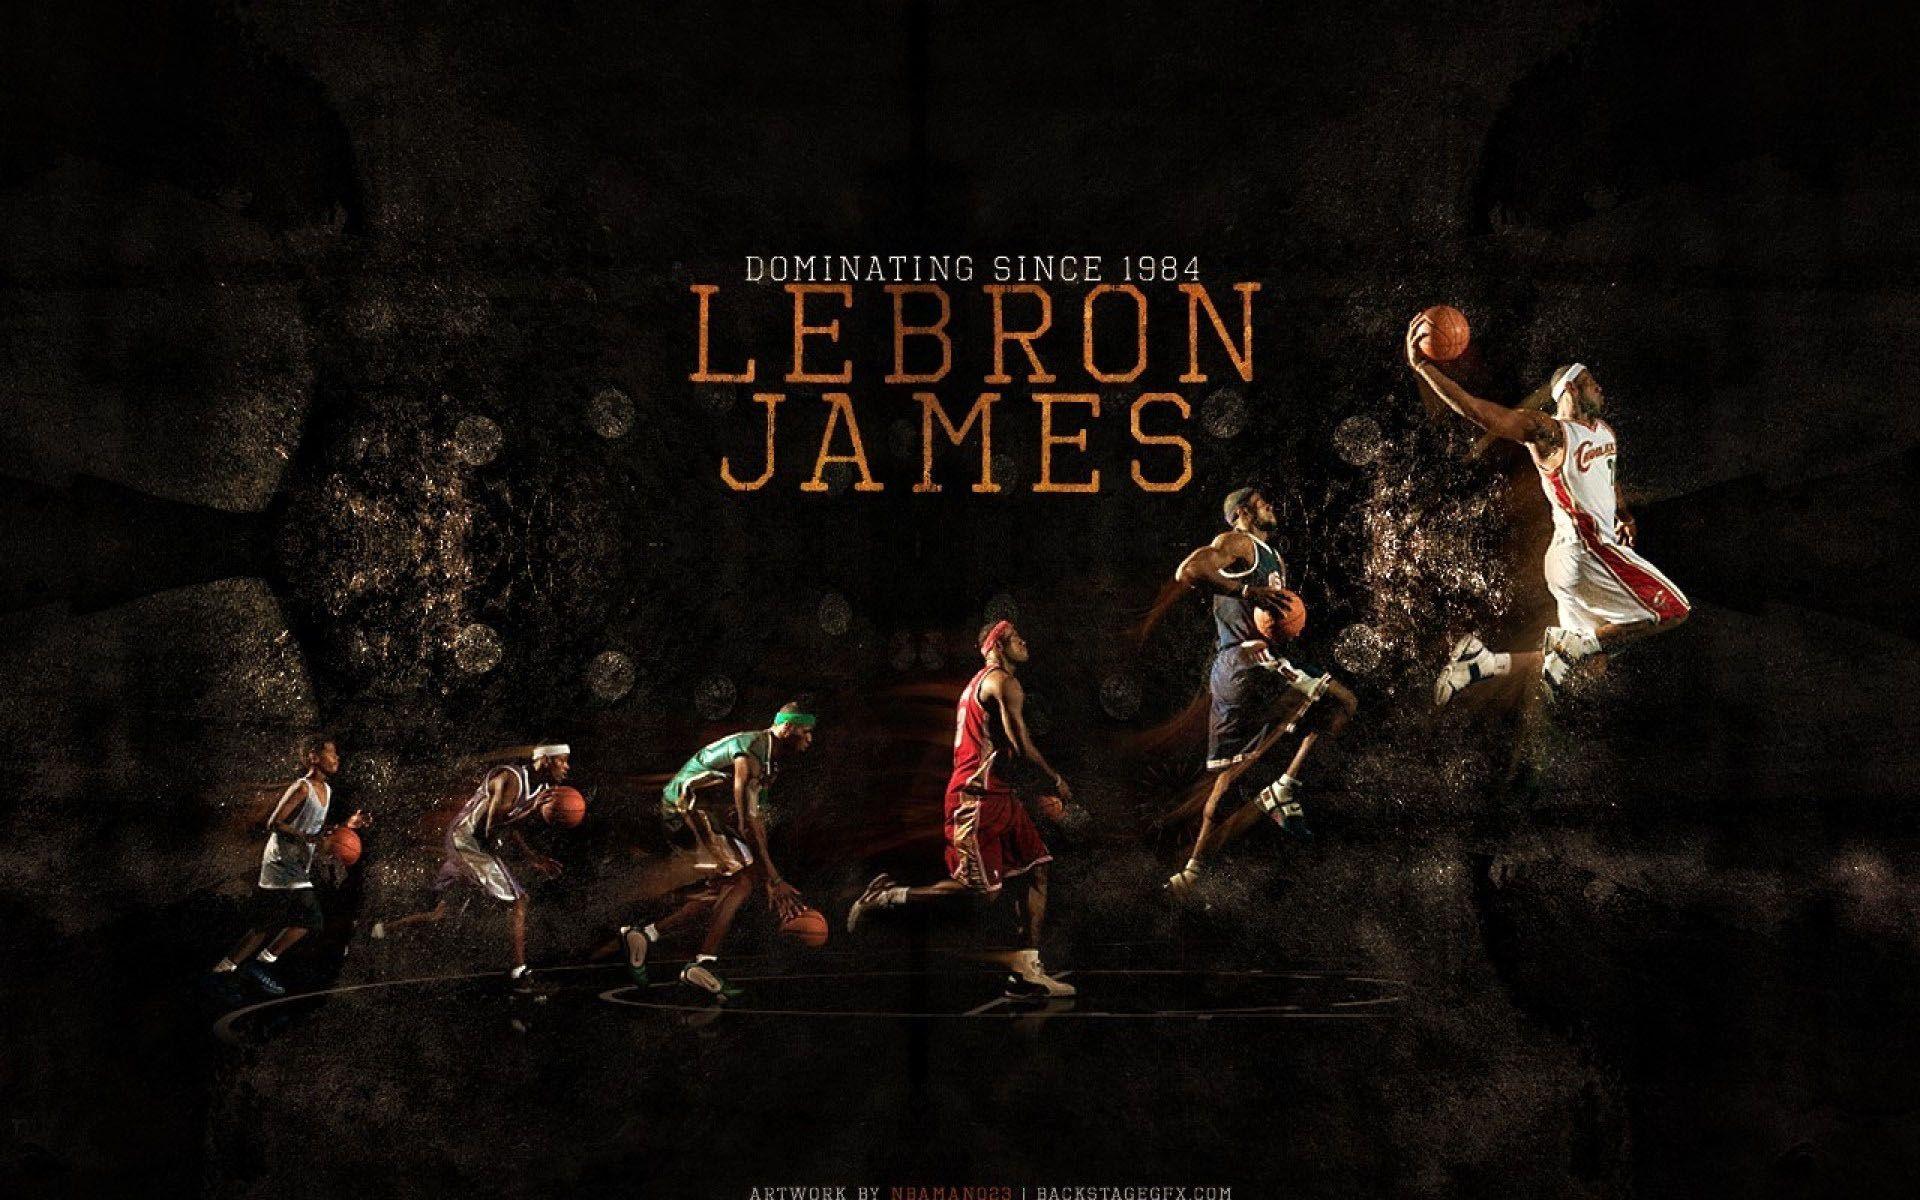 LeBron James wallpaper HD free Download